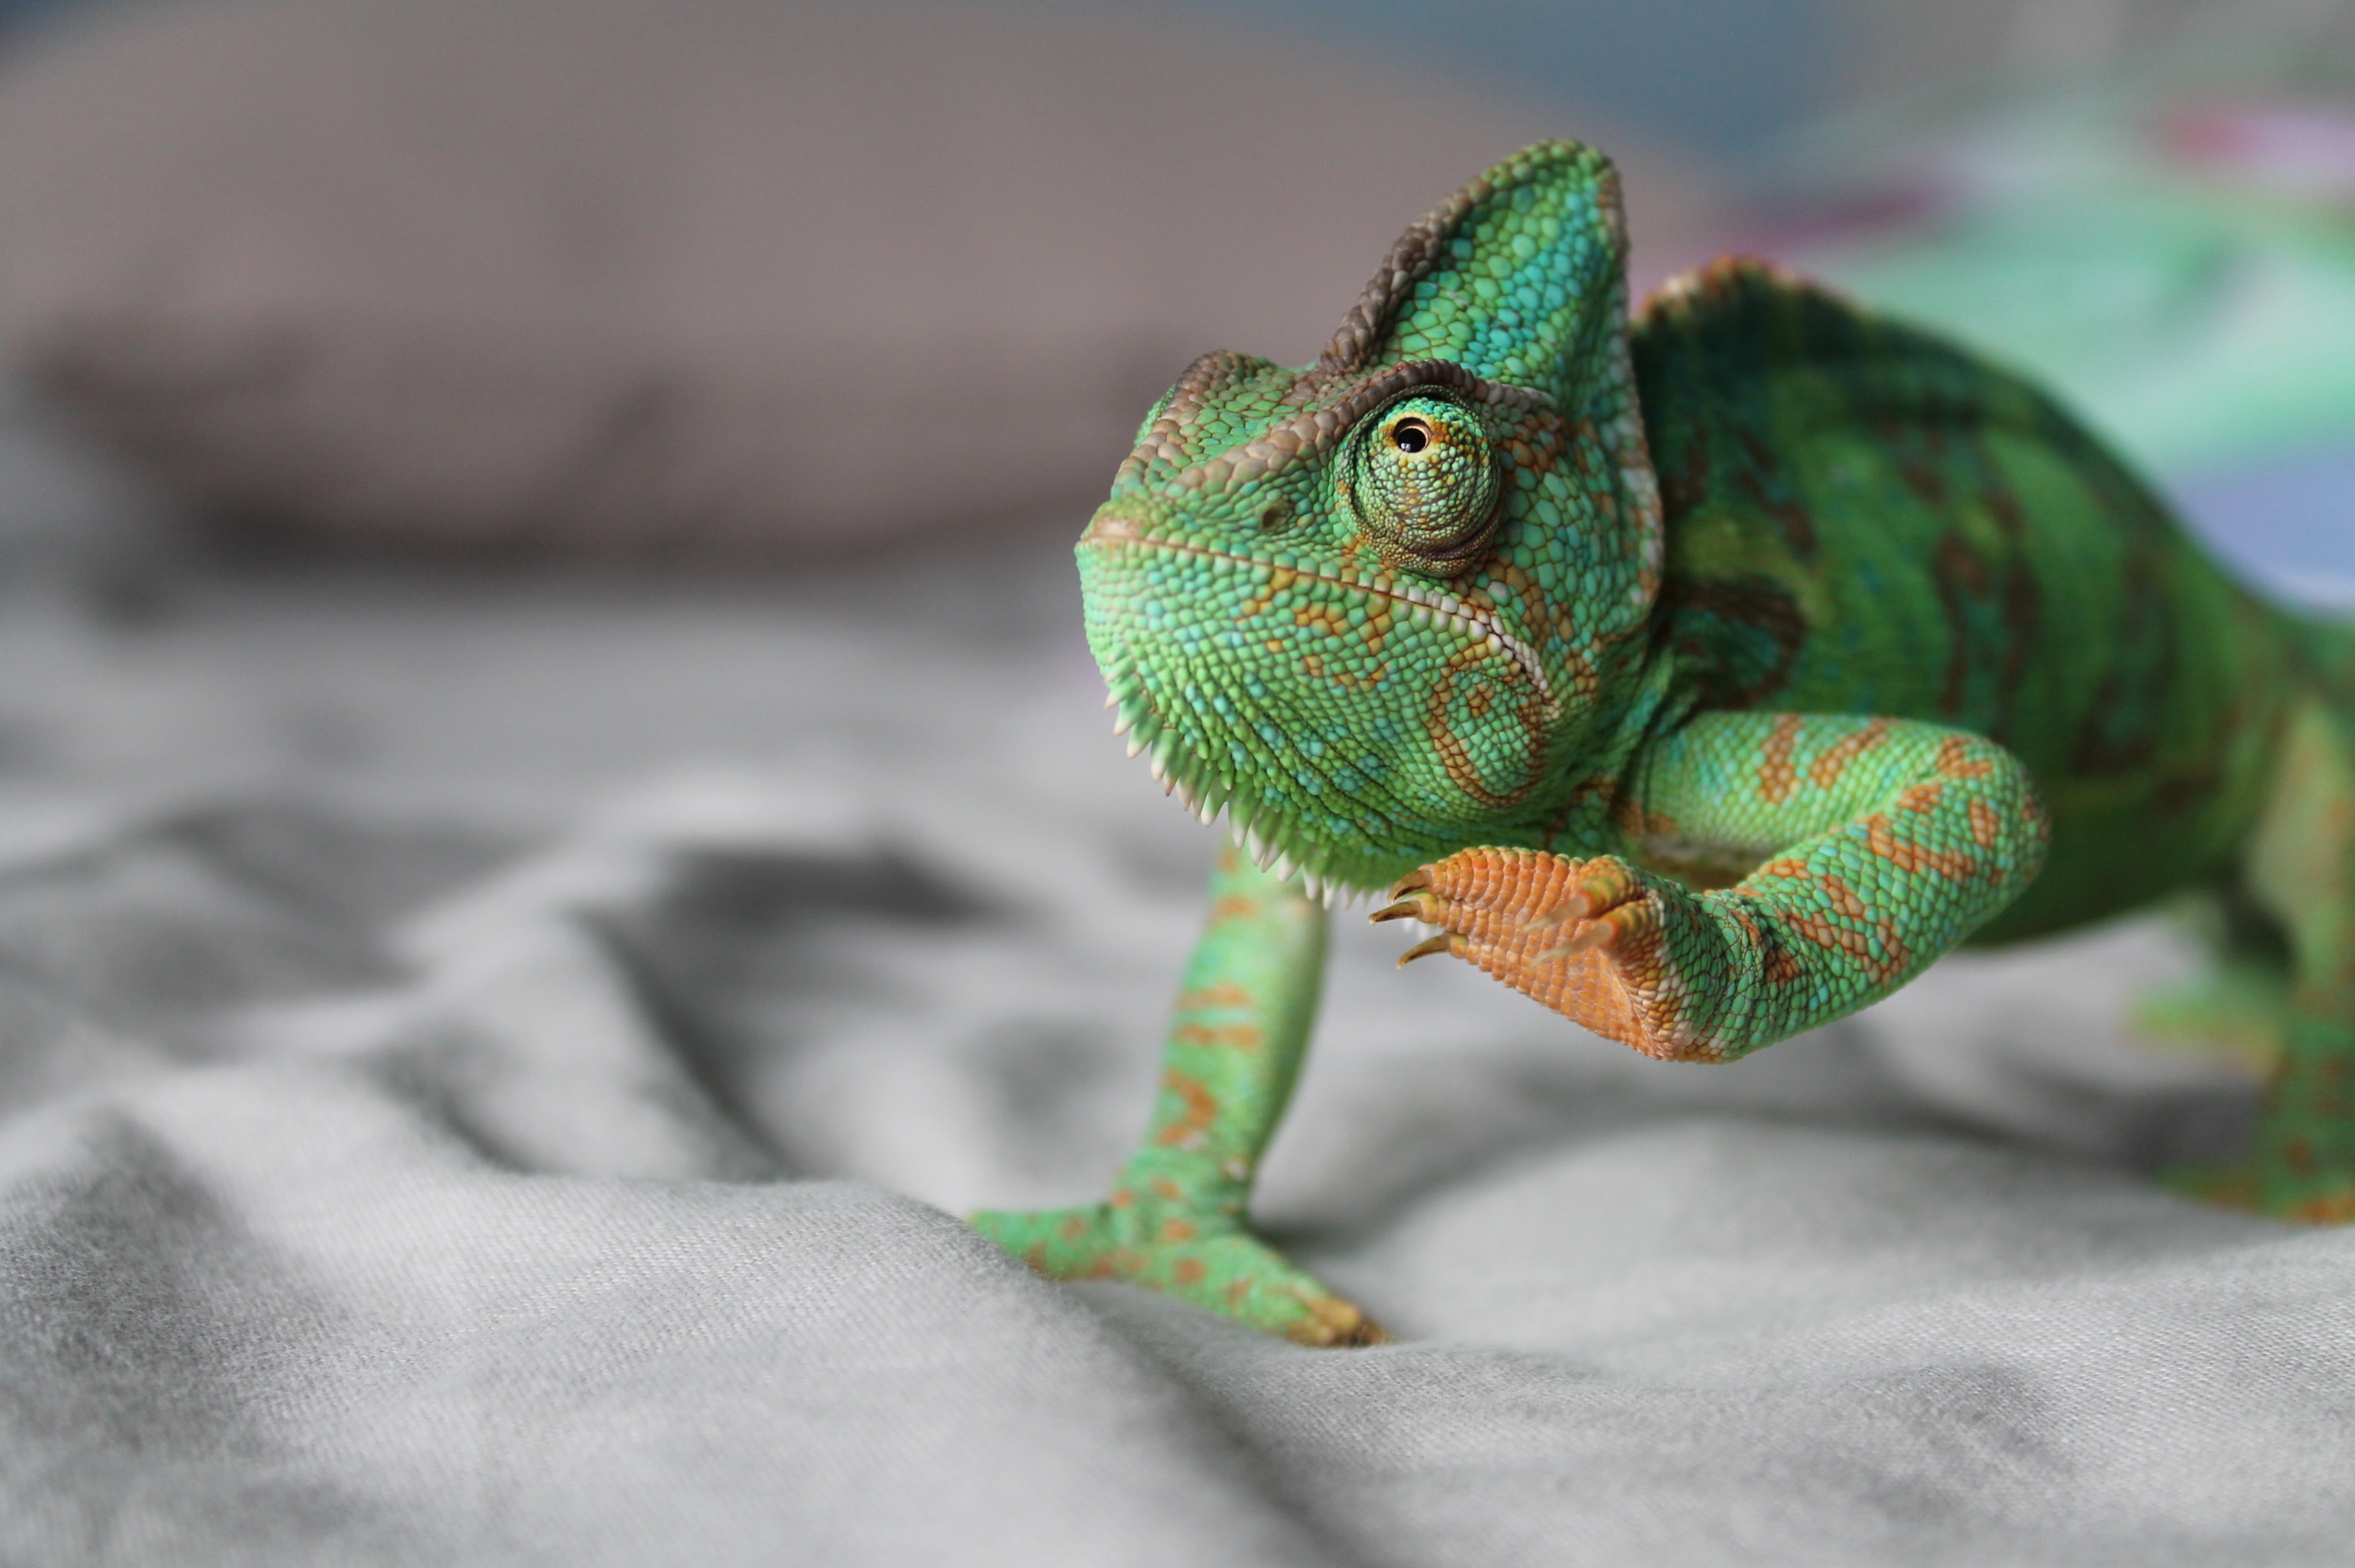 Image of a chameleon